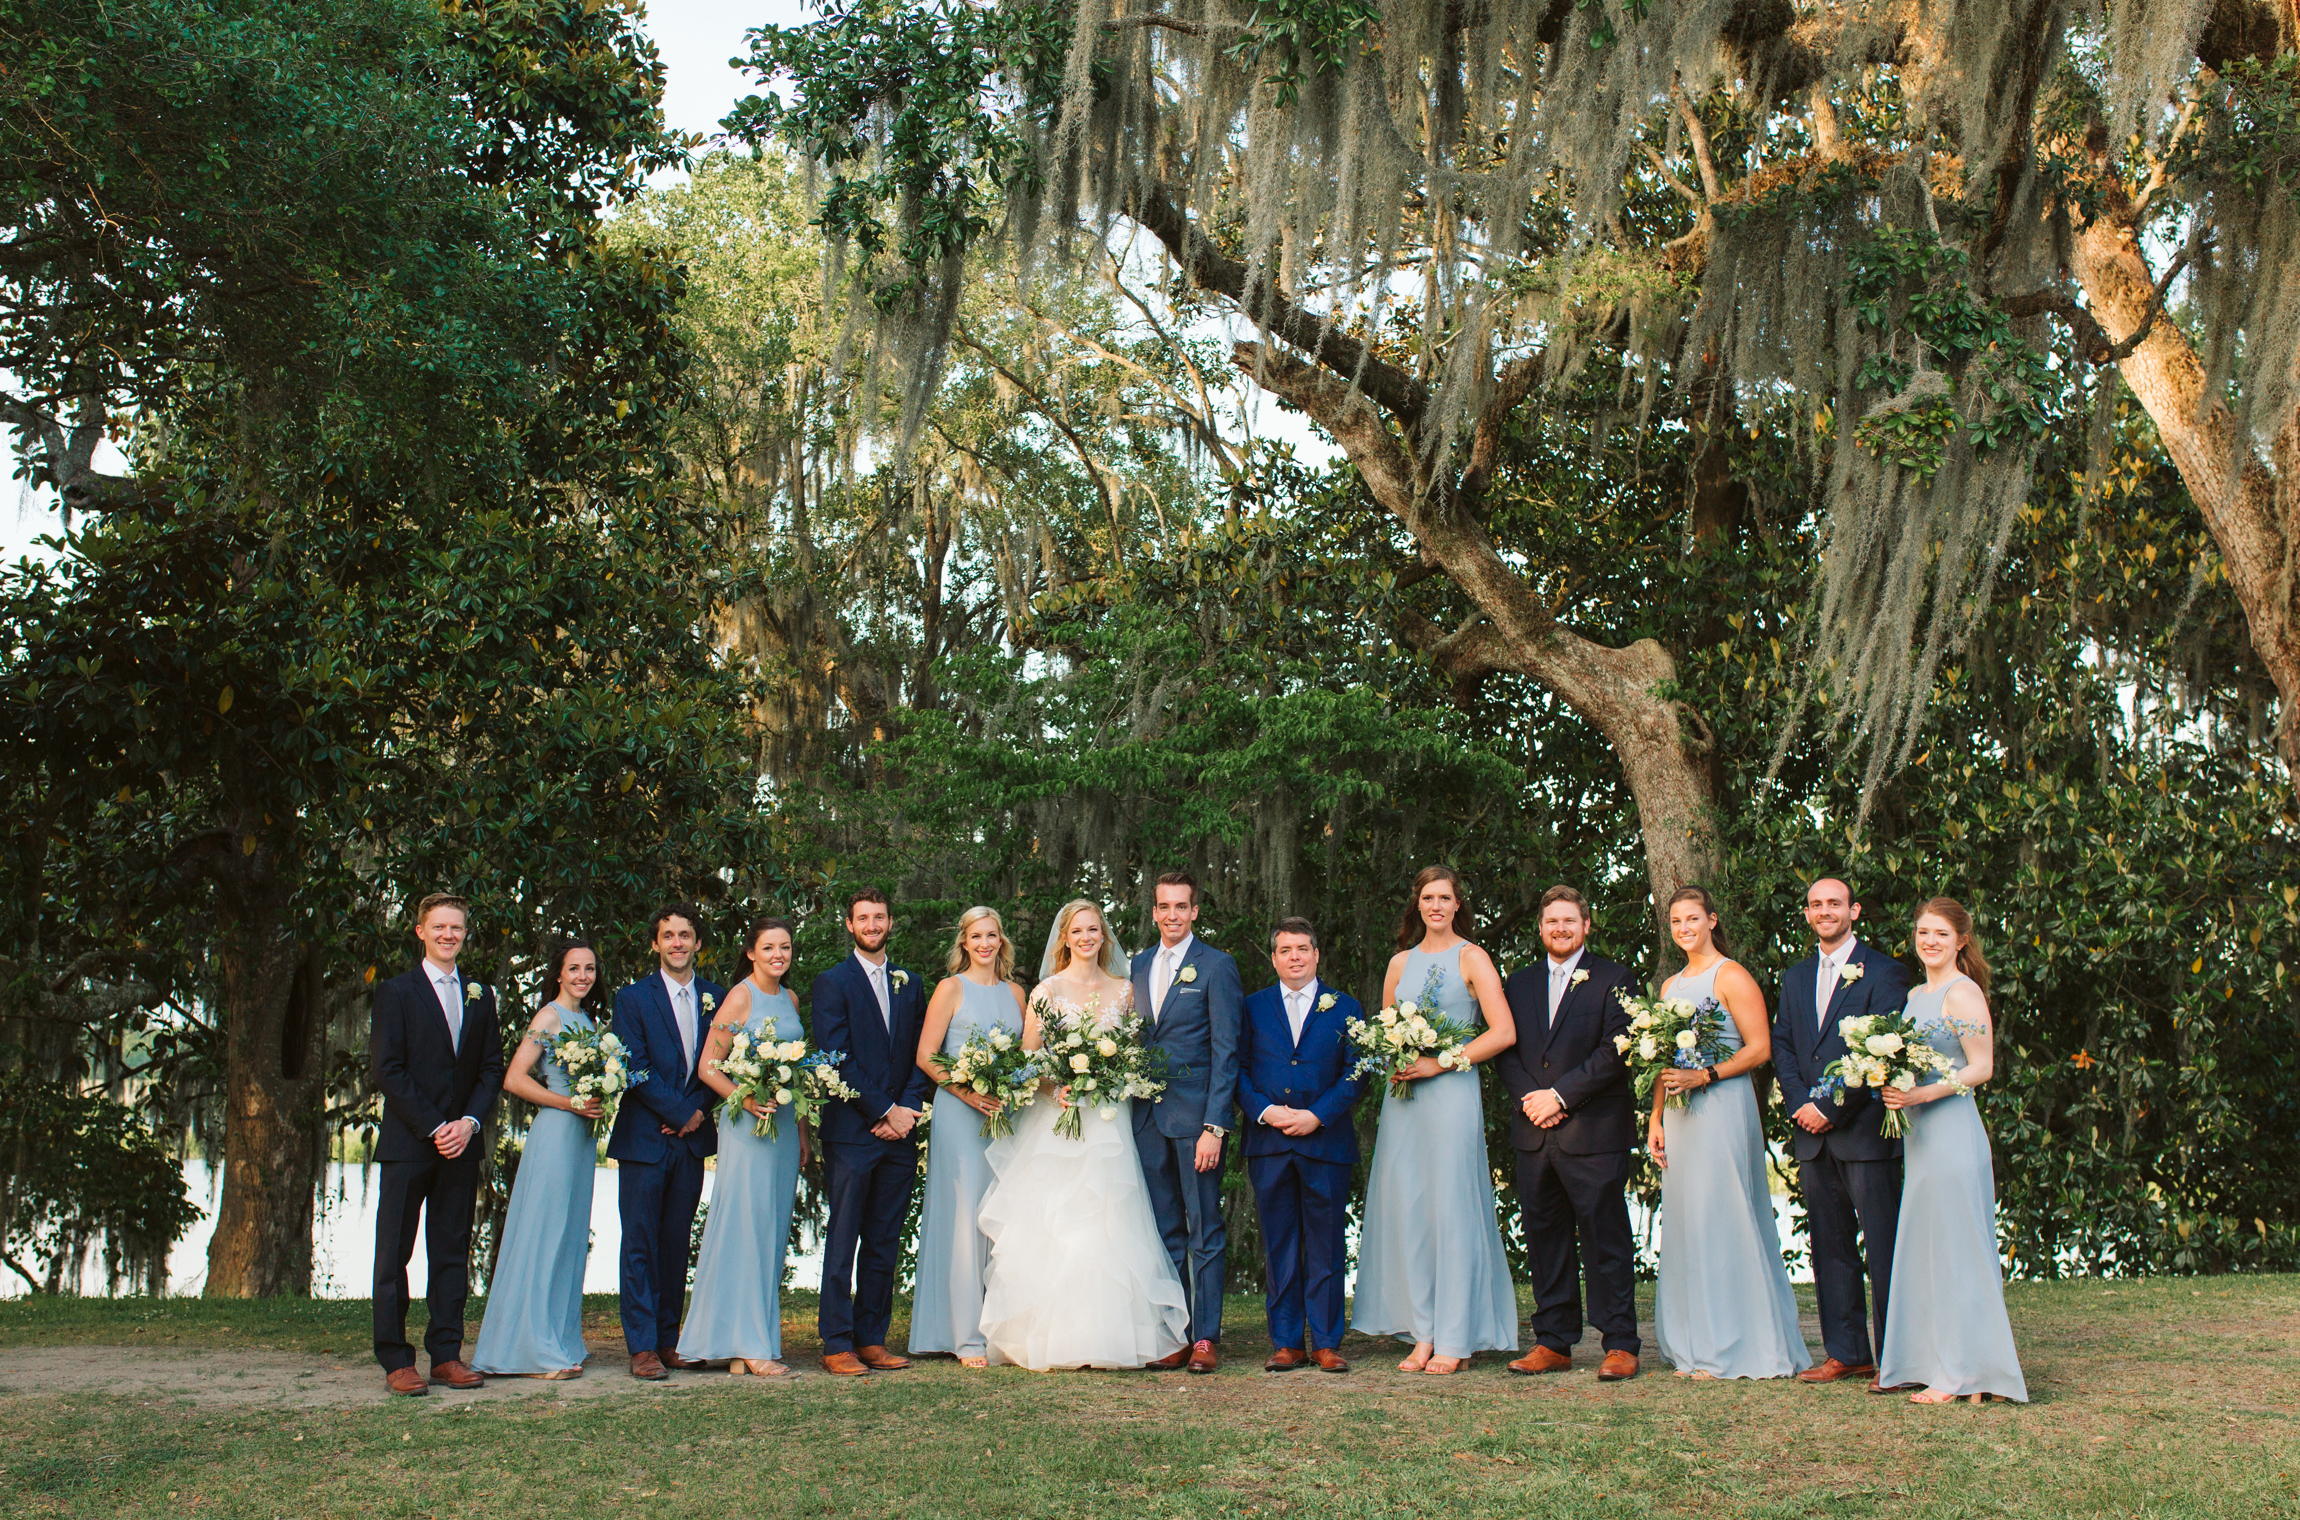 Middleton Place Charleston SC wedding-4427.jpg